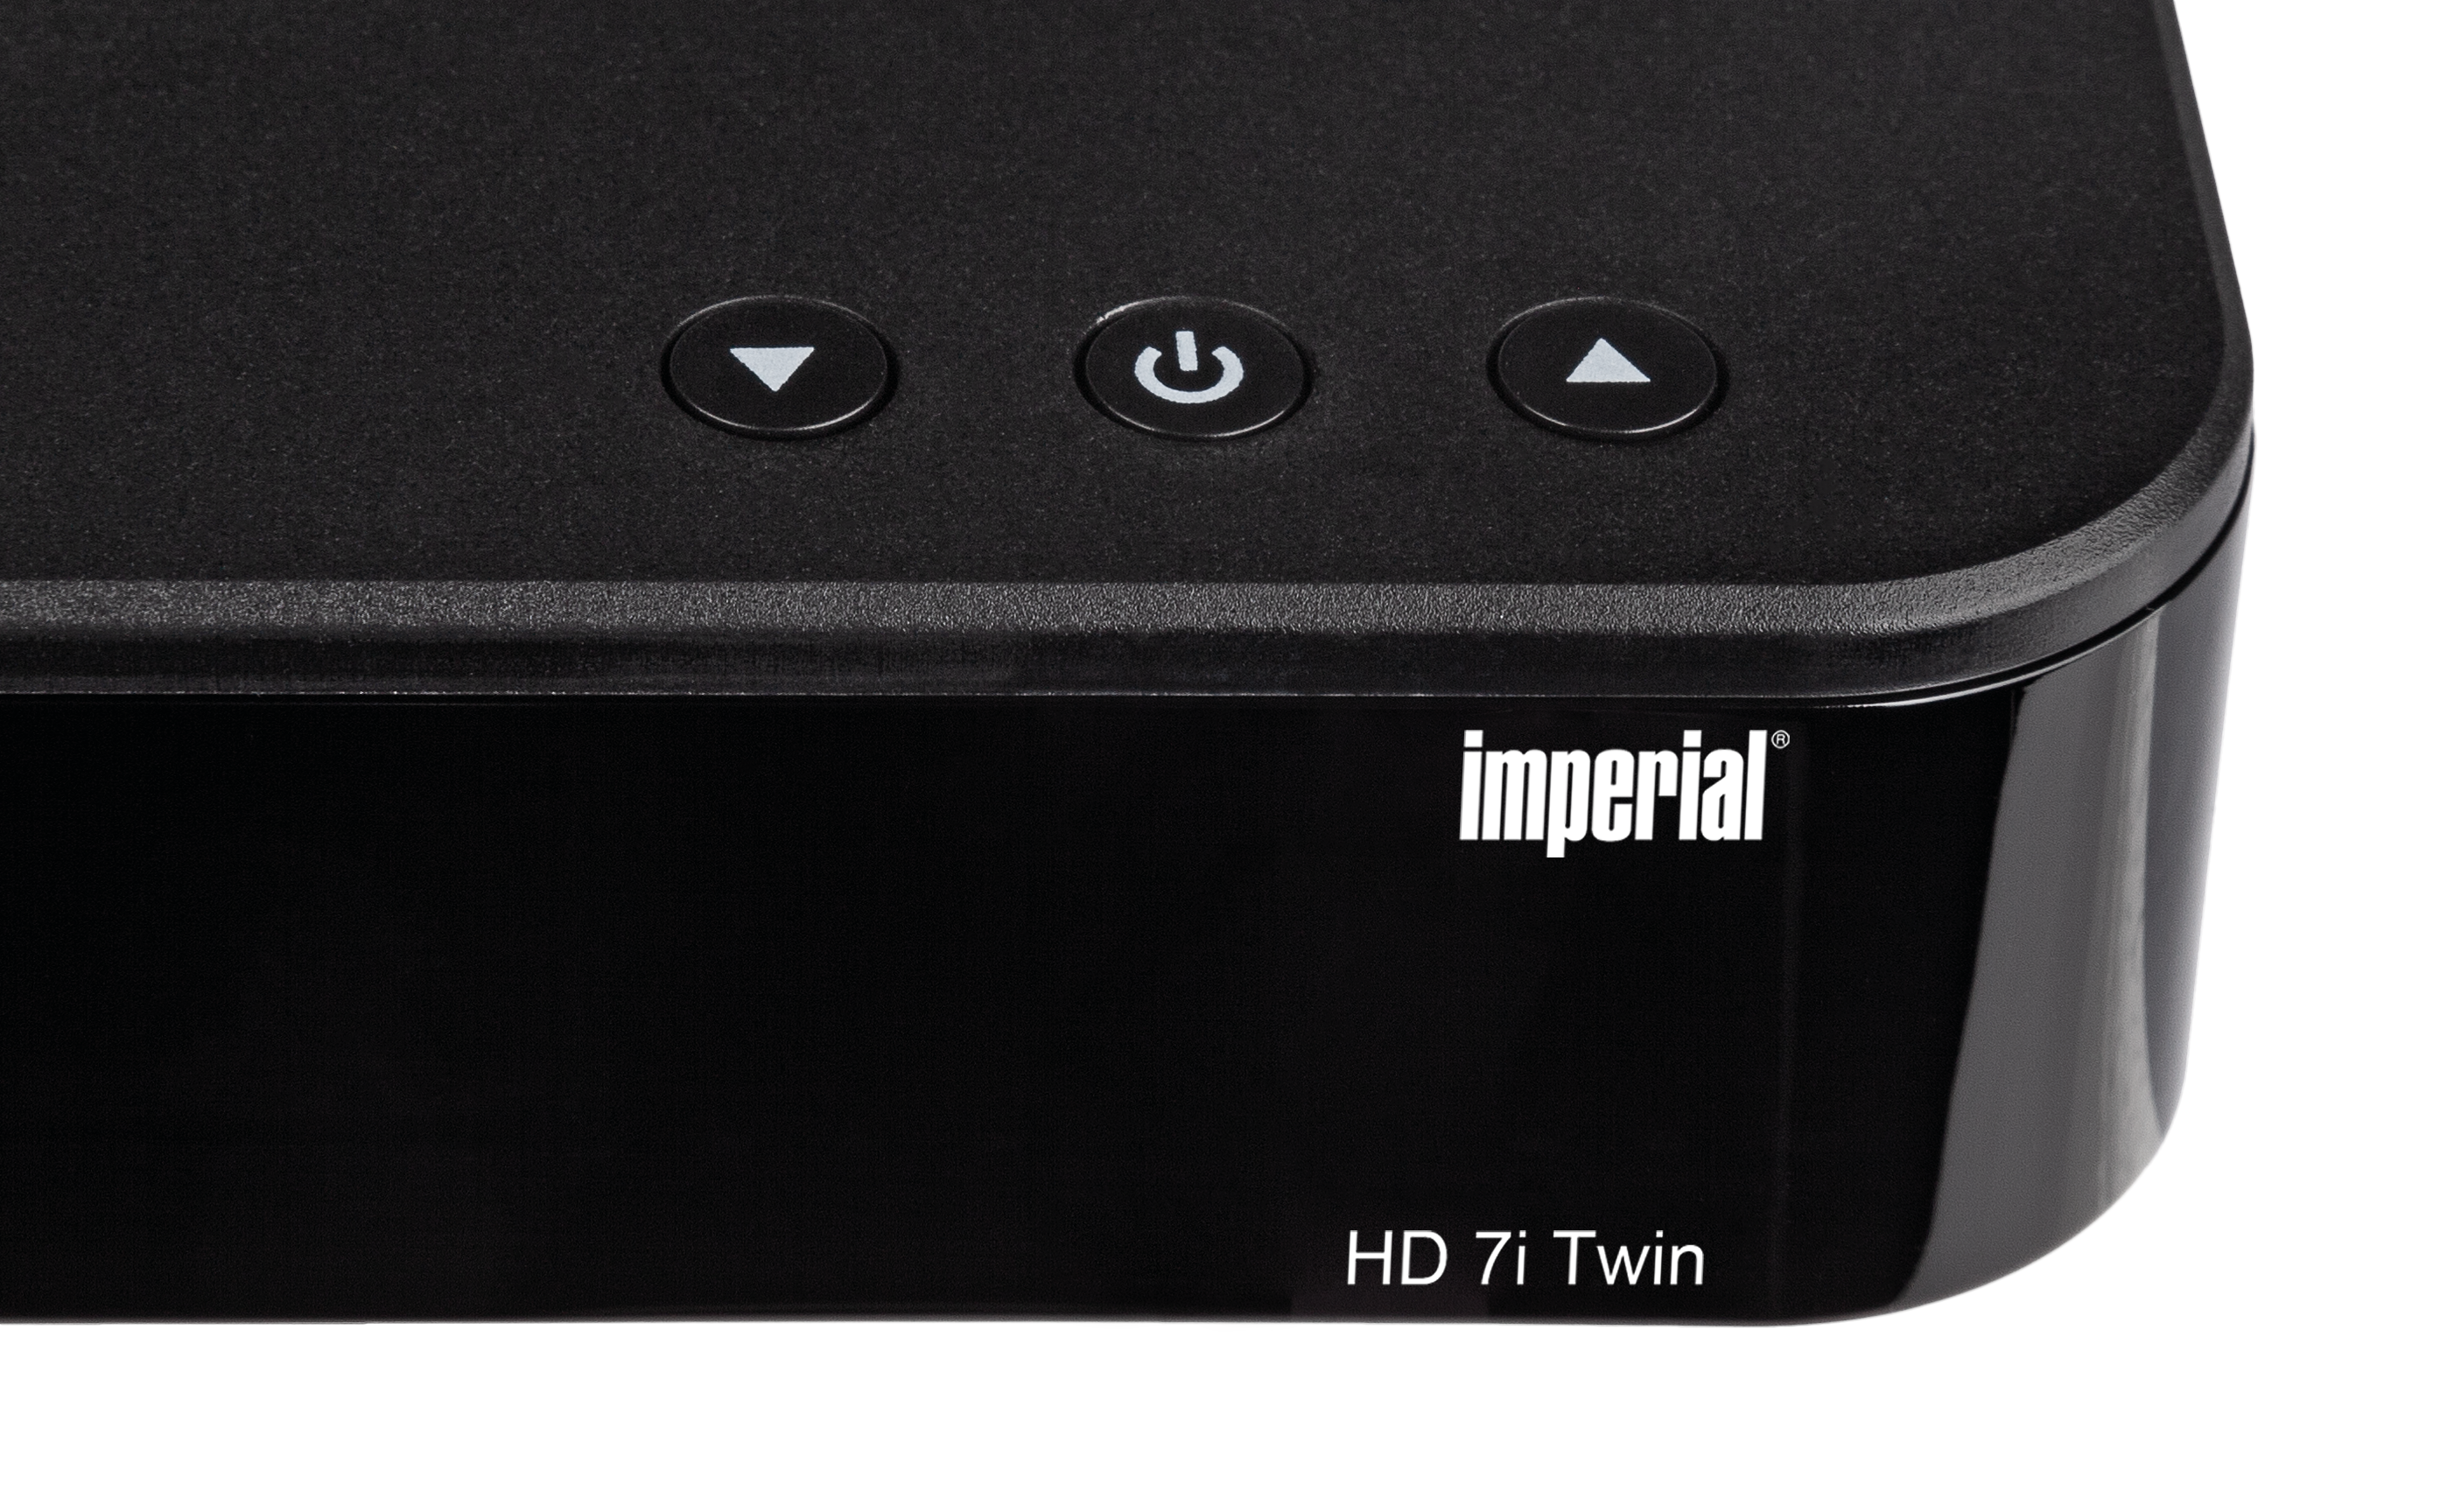 IMPERIAL Twin DVB-S, 77-561-00 Tuner, (HDTV, Schwarz) HD PVR-Funktion, DVB-S2, Twin Satreceiver